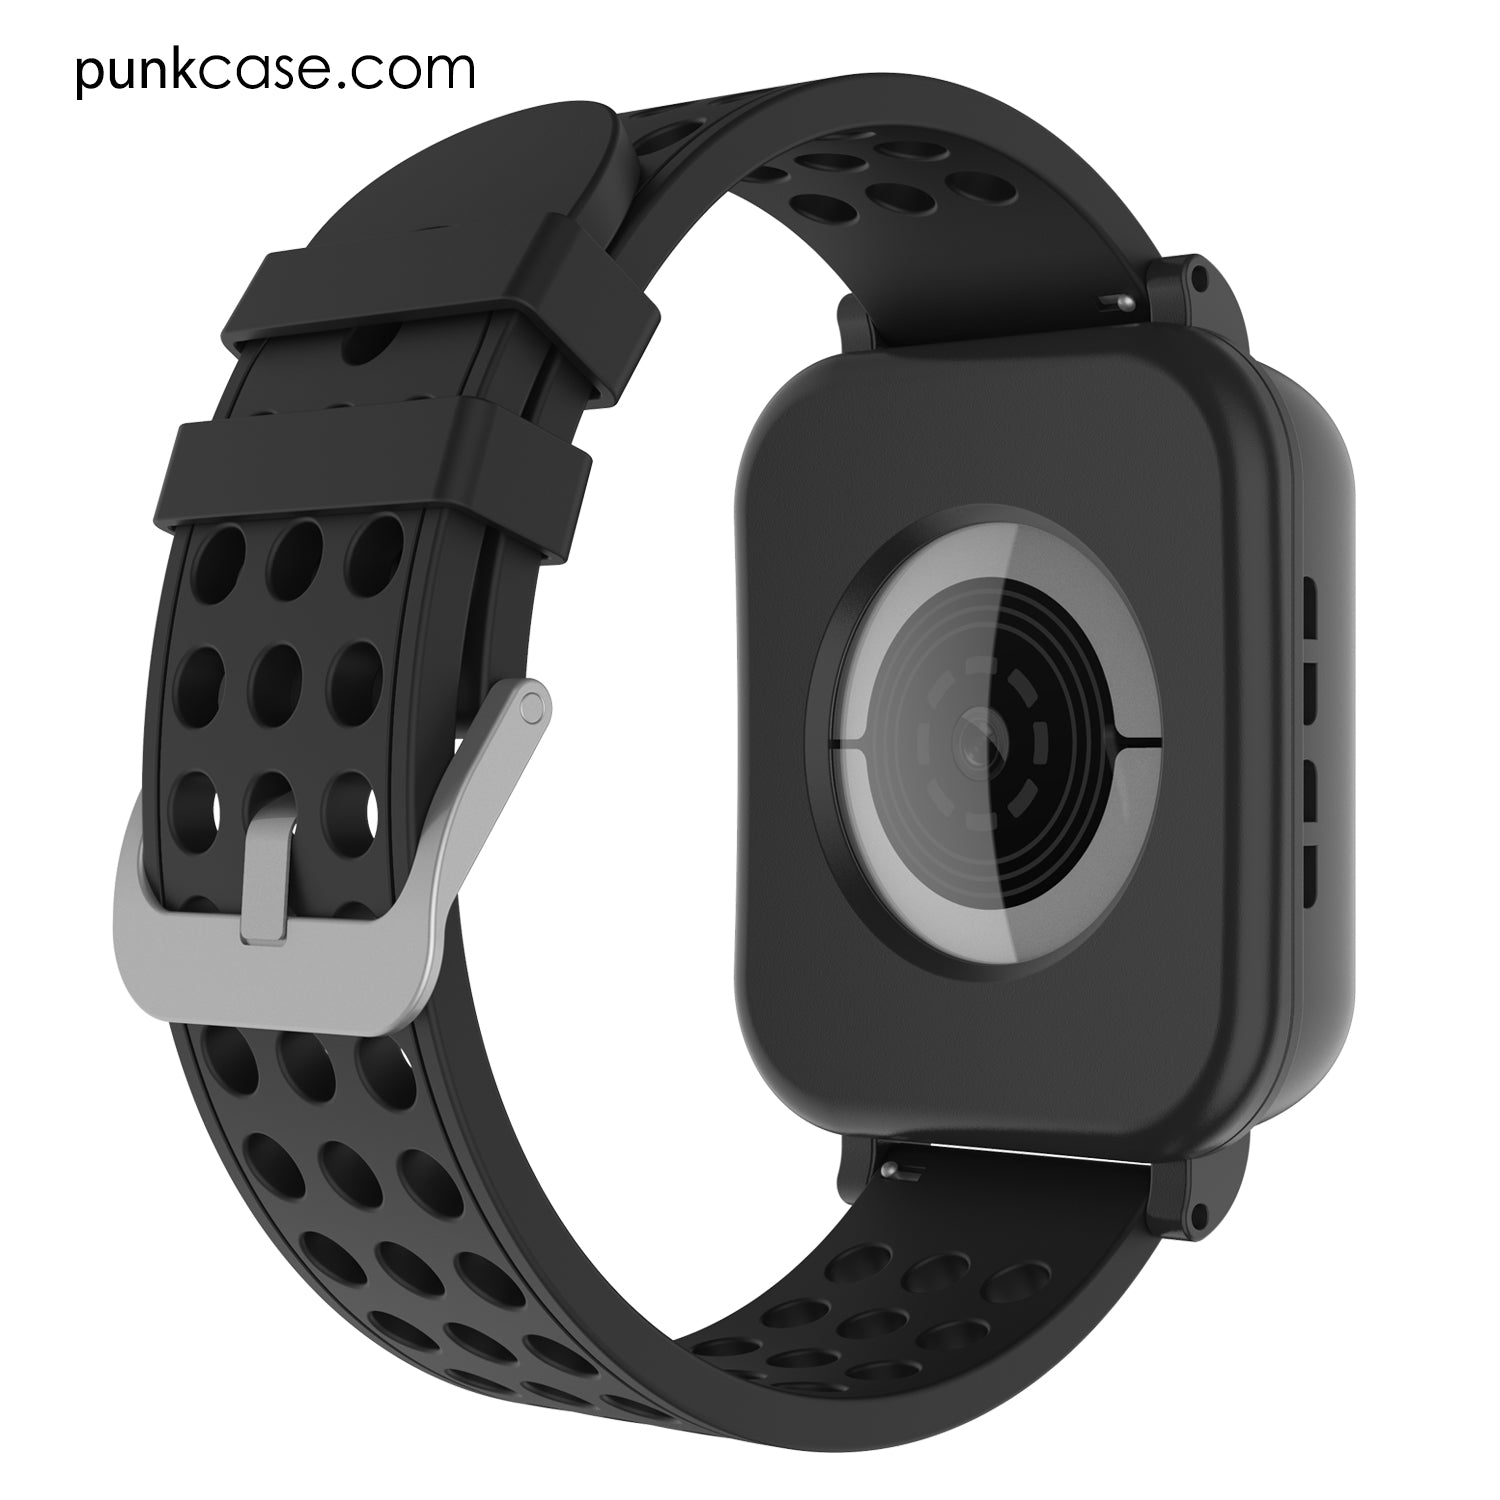 Punkcase Waterproof Case for Apple Watch Series 4 & 5 (44mm) (Black)